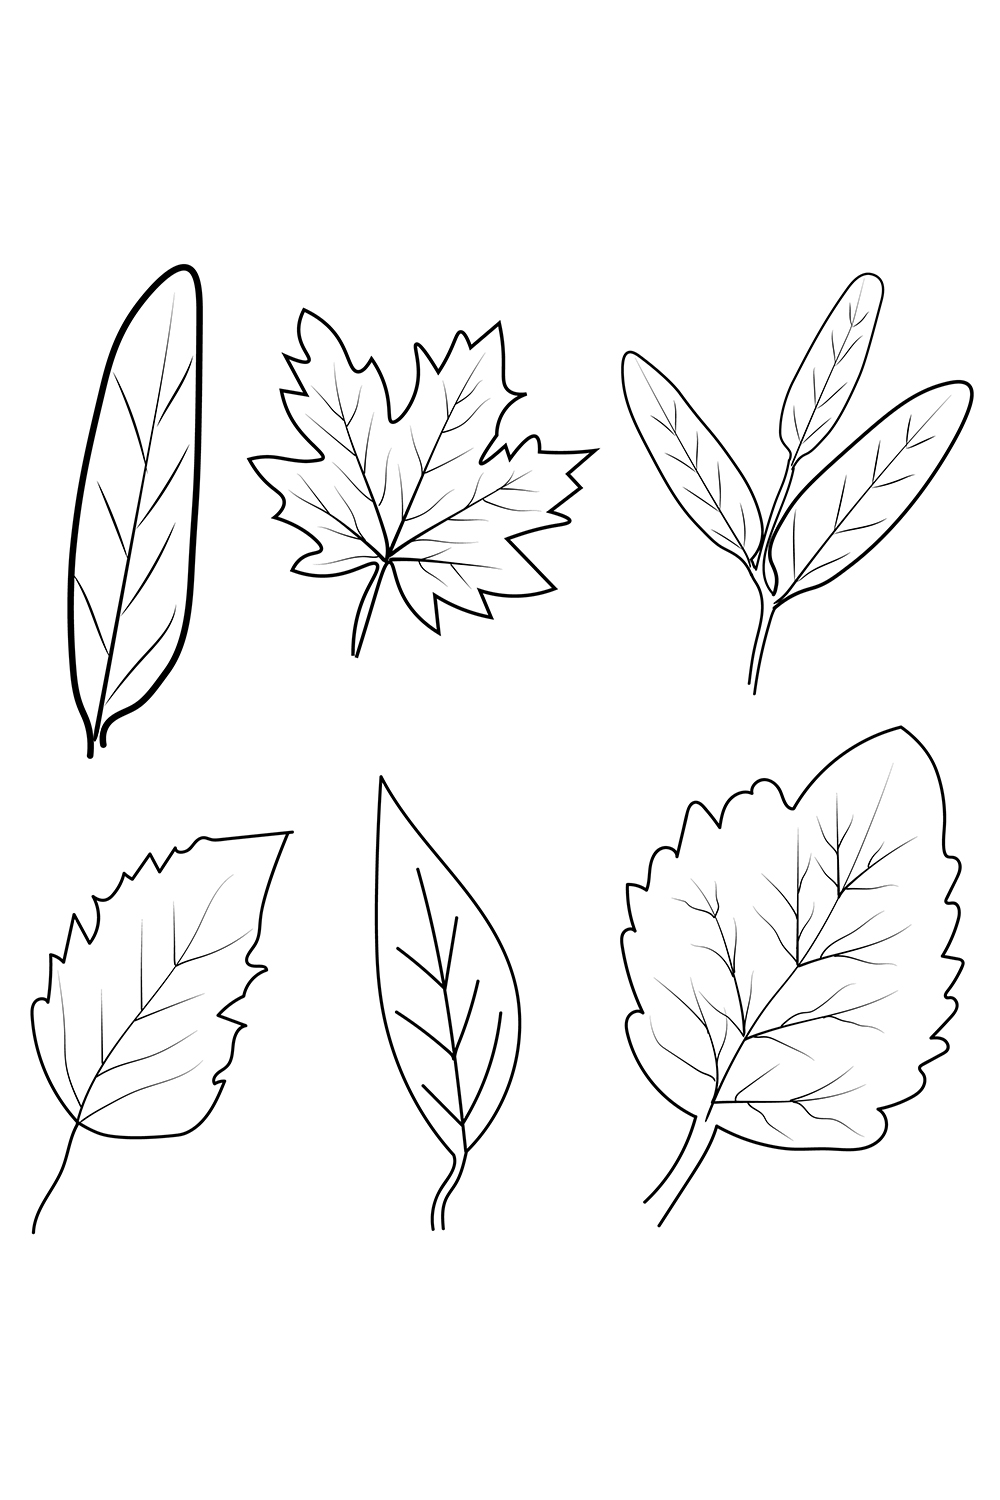 Set of hand-drawn black and white autumn falling leaves - rowan, oak, chestnut, maple, ginkgo, aspen, sketch art style vector pinterest preview image.